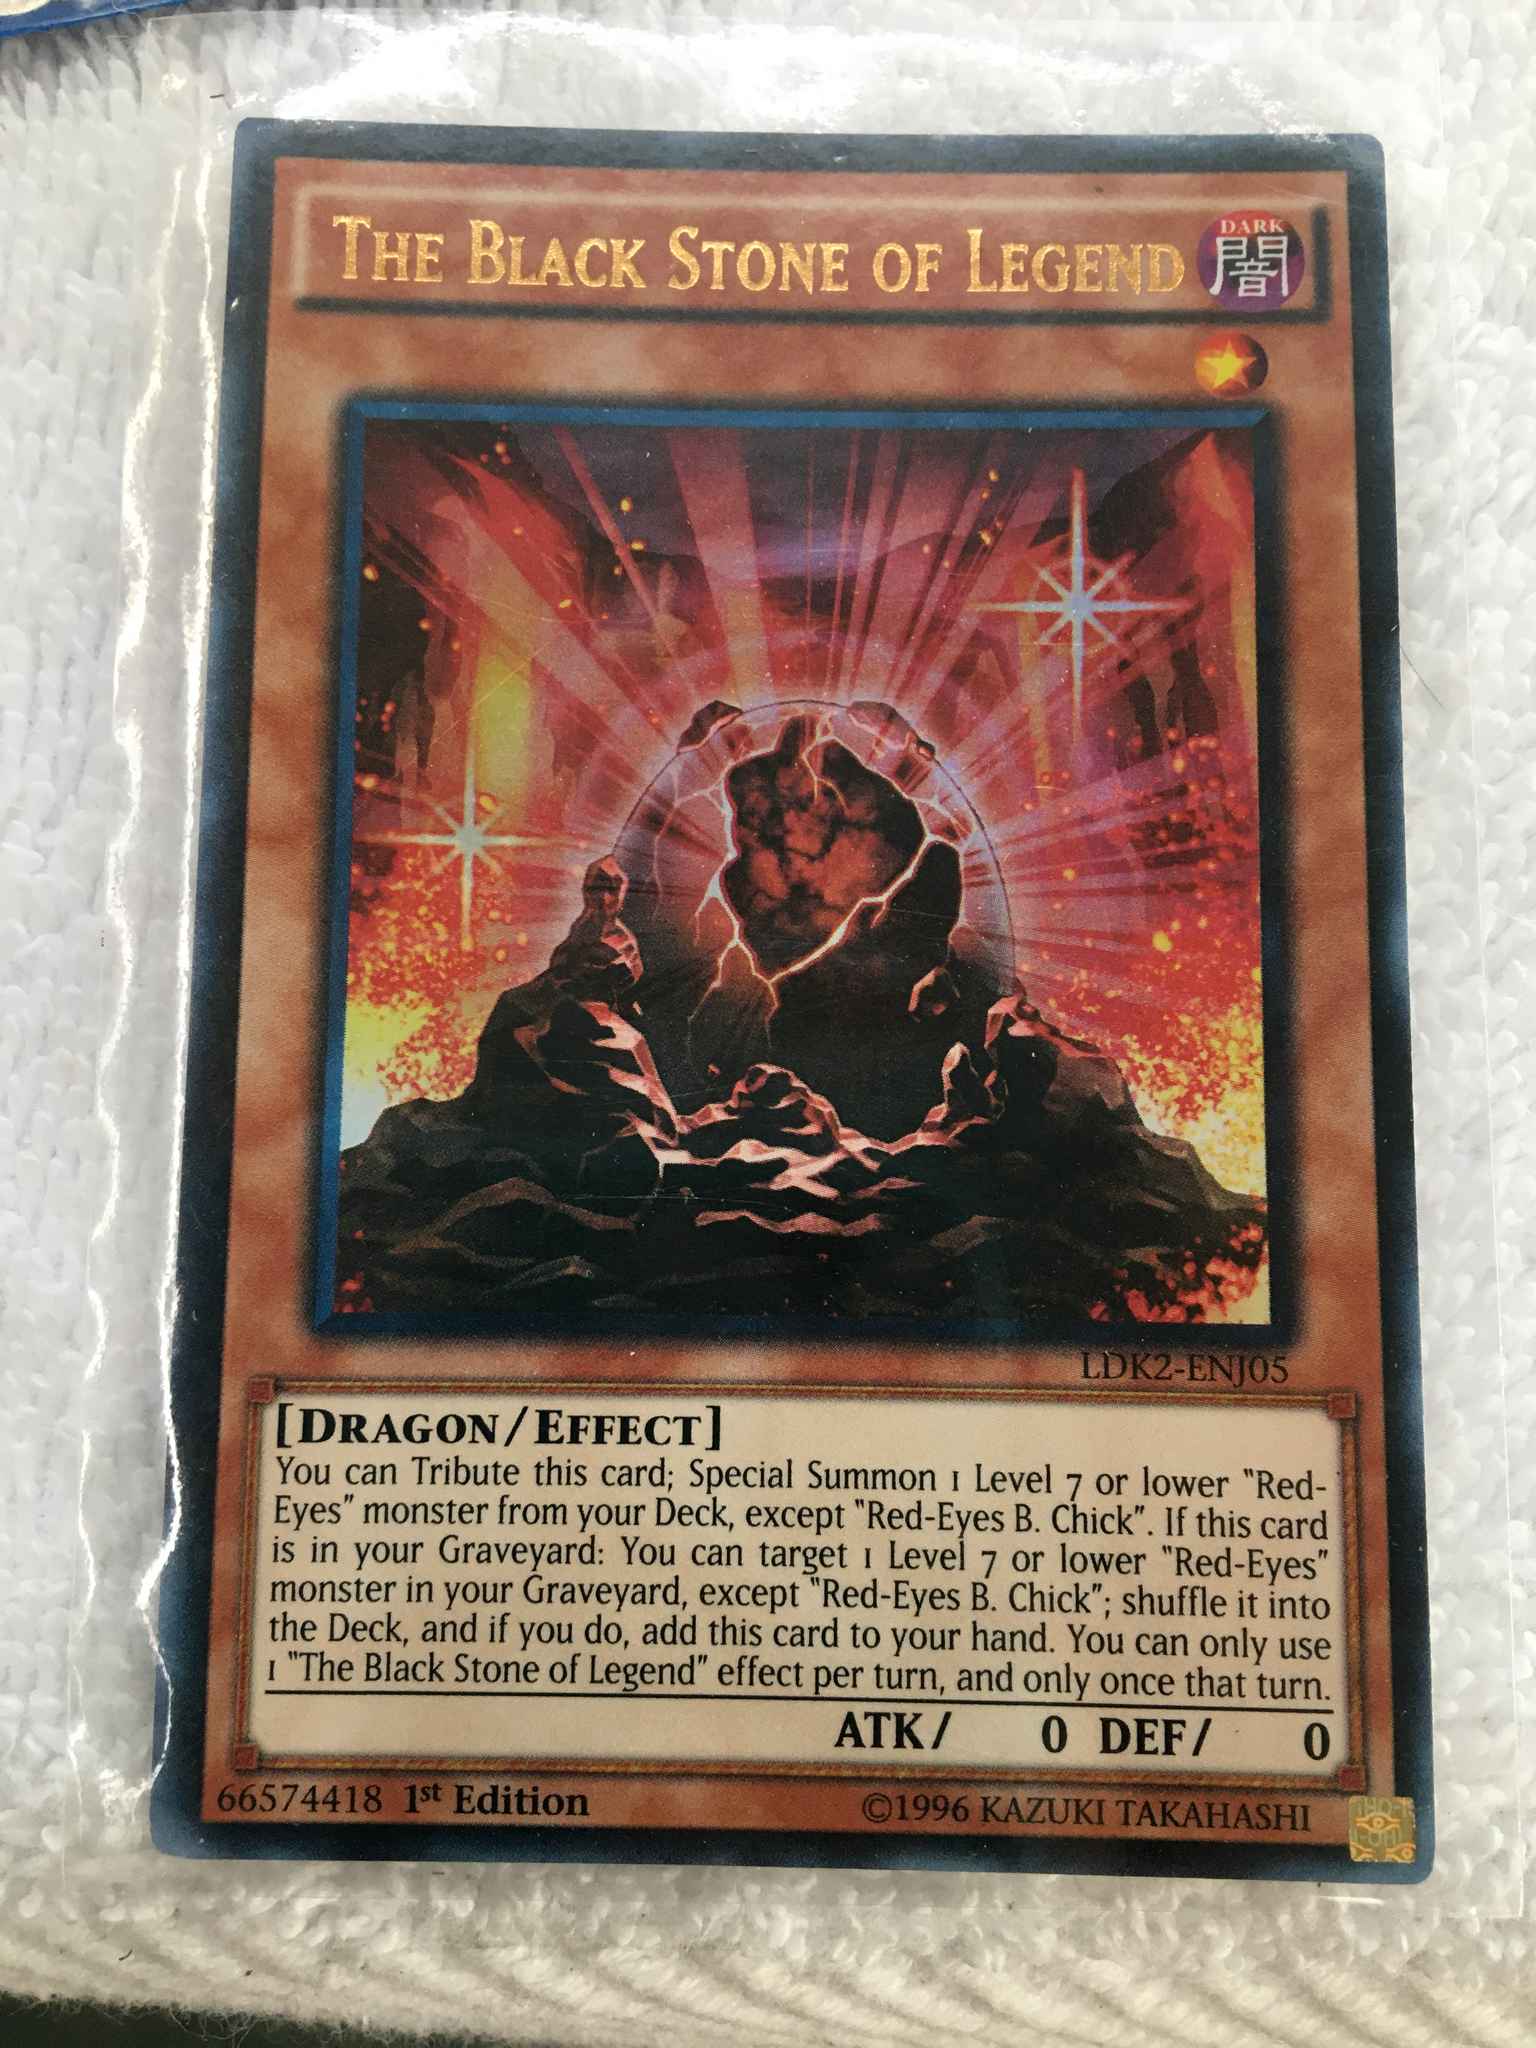 The Black Stone of Legend LDK2-ENJ05 Ultra Rare Limited Edition NM JG2 